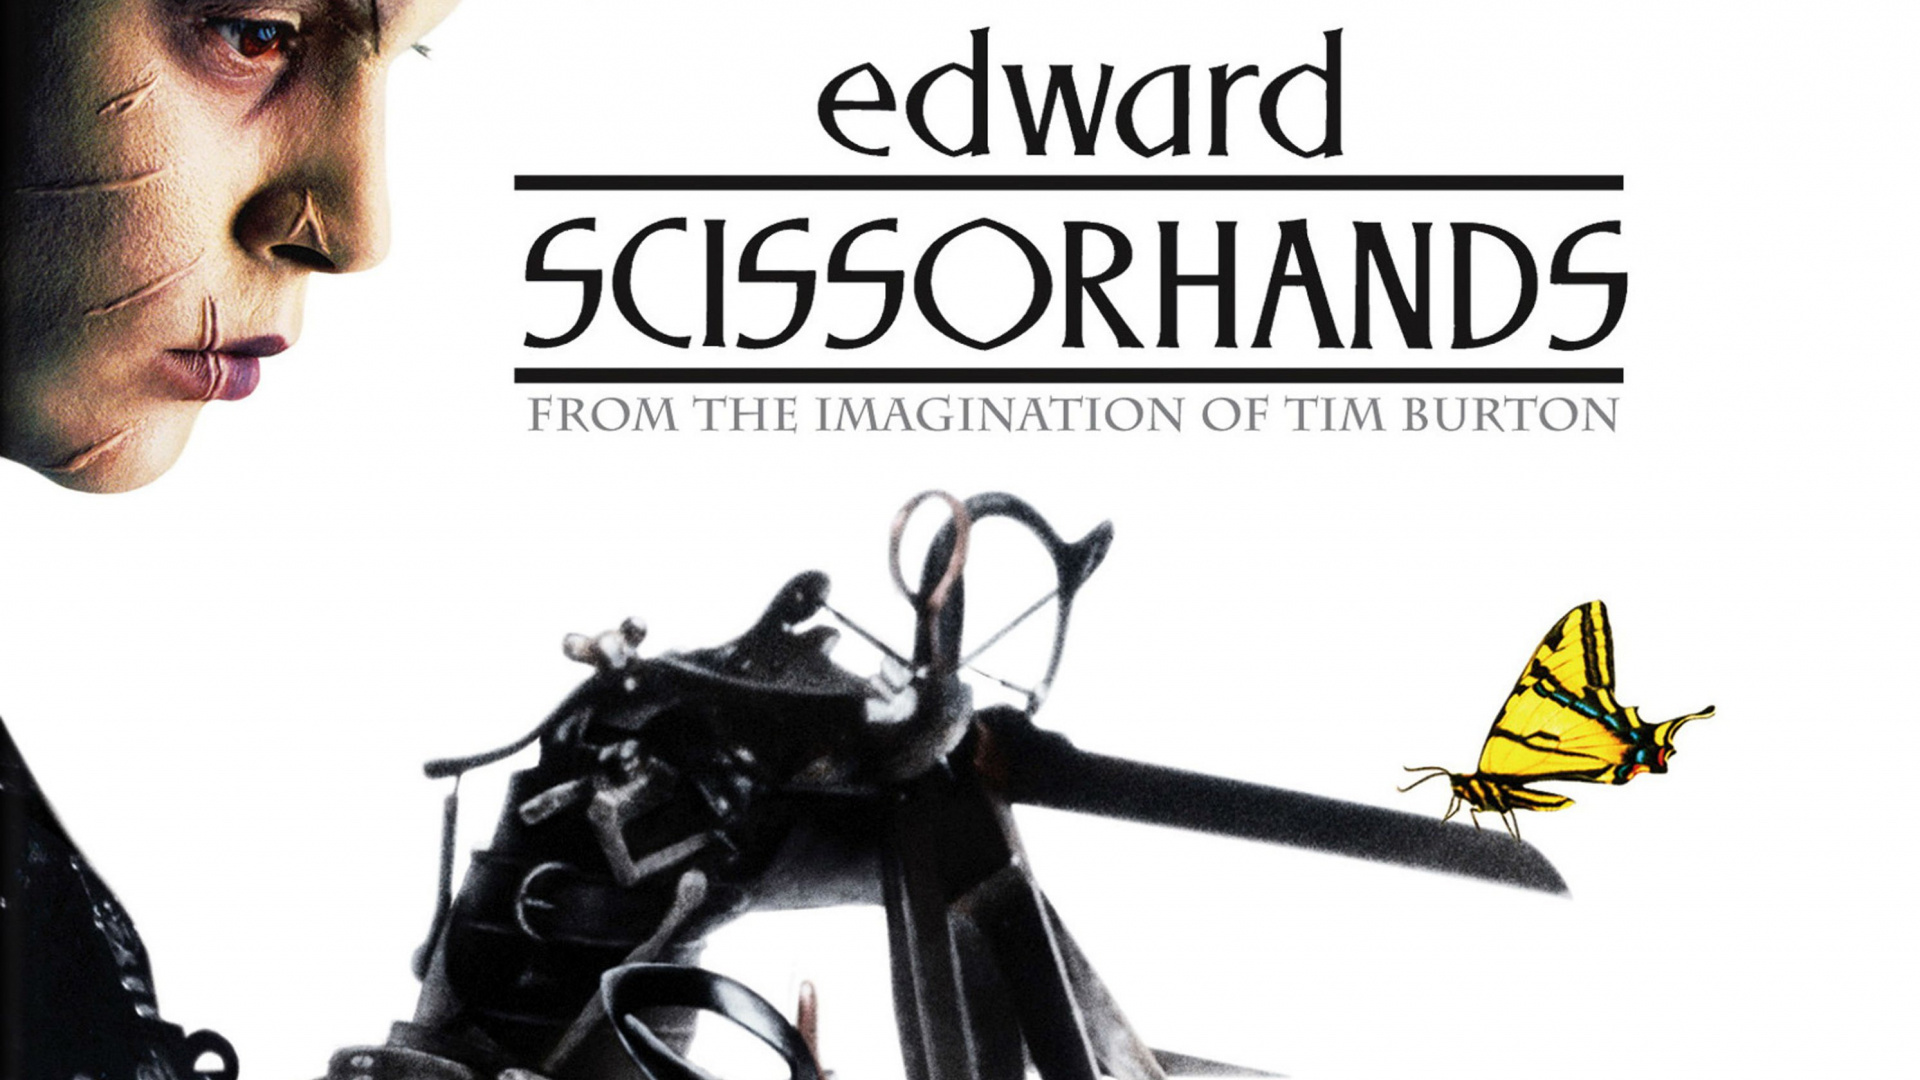 Edward Scissorhands: An animated human being, Fantasy film by Tim Burton. 1920x1080 Full HD Background.